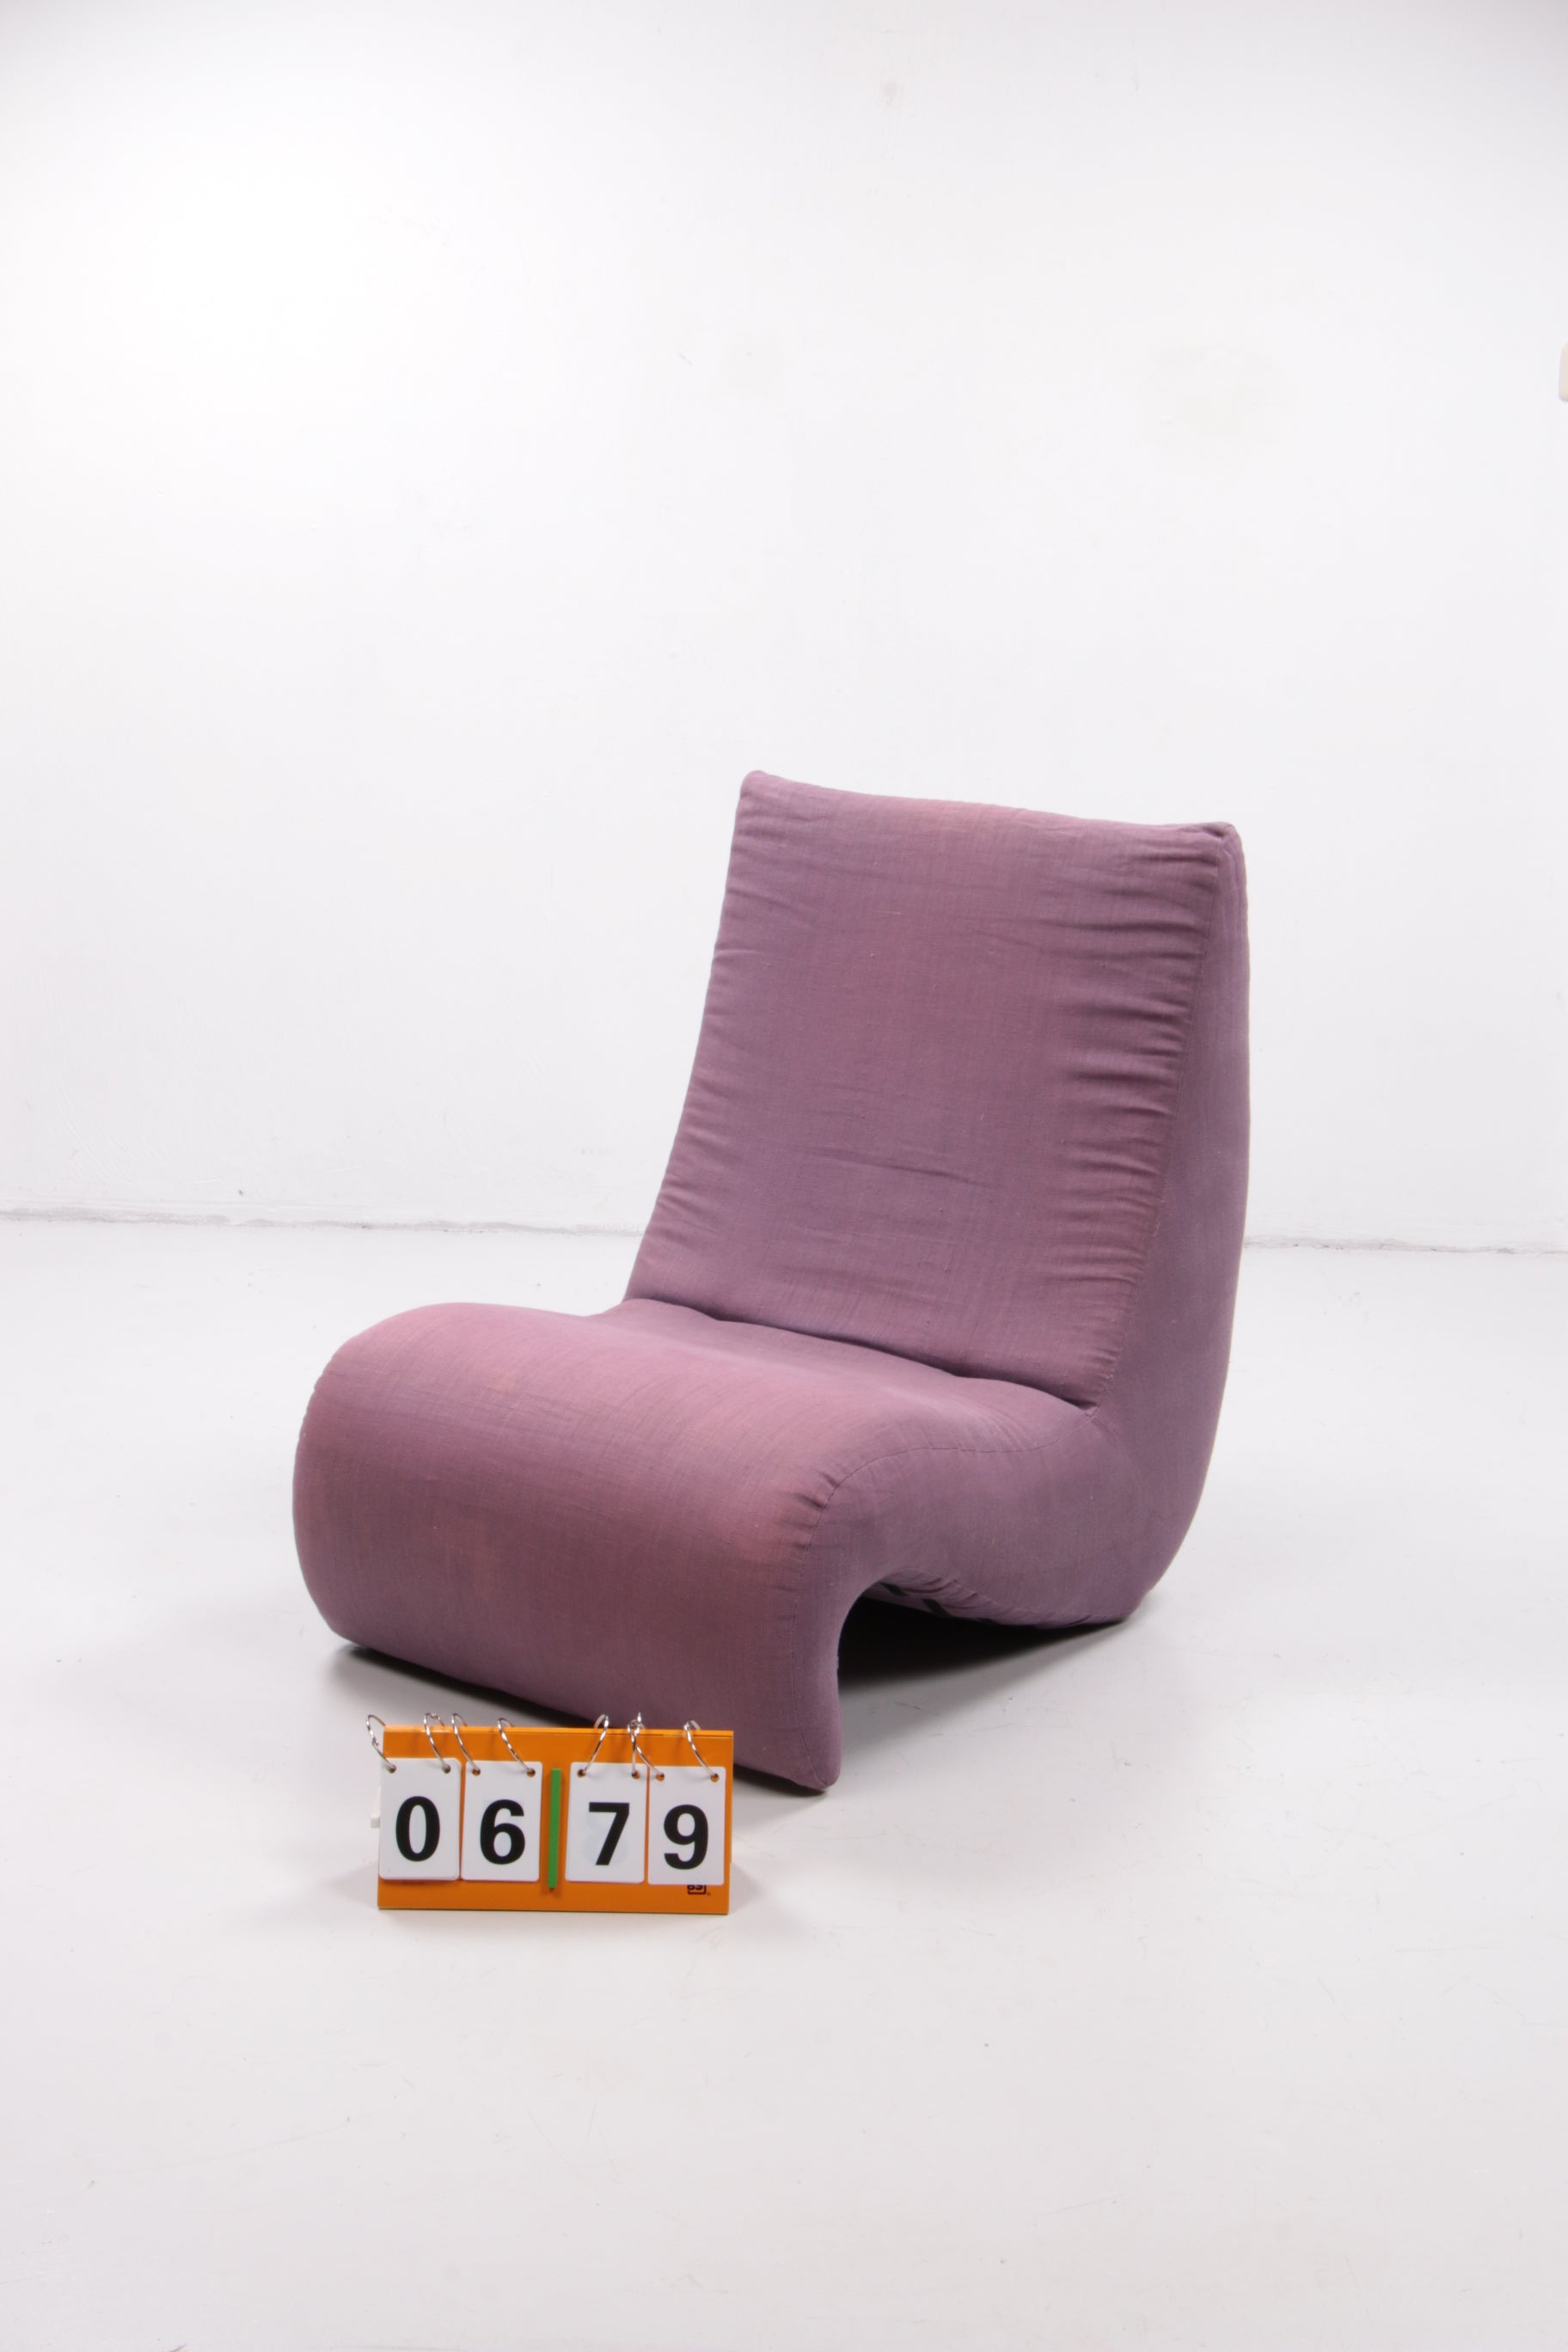 Vintage Relax fauteuil ontwerp van Verner Panton Model Amoebe,1970